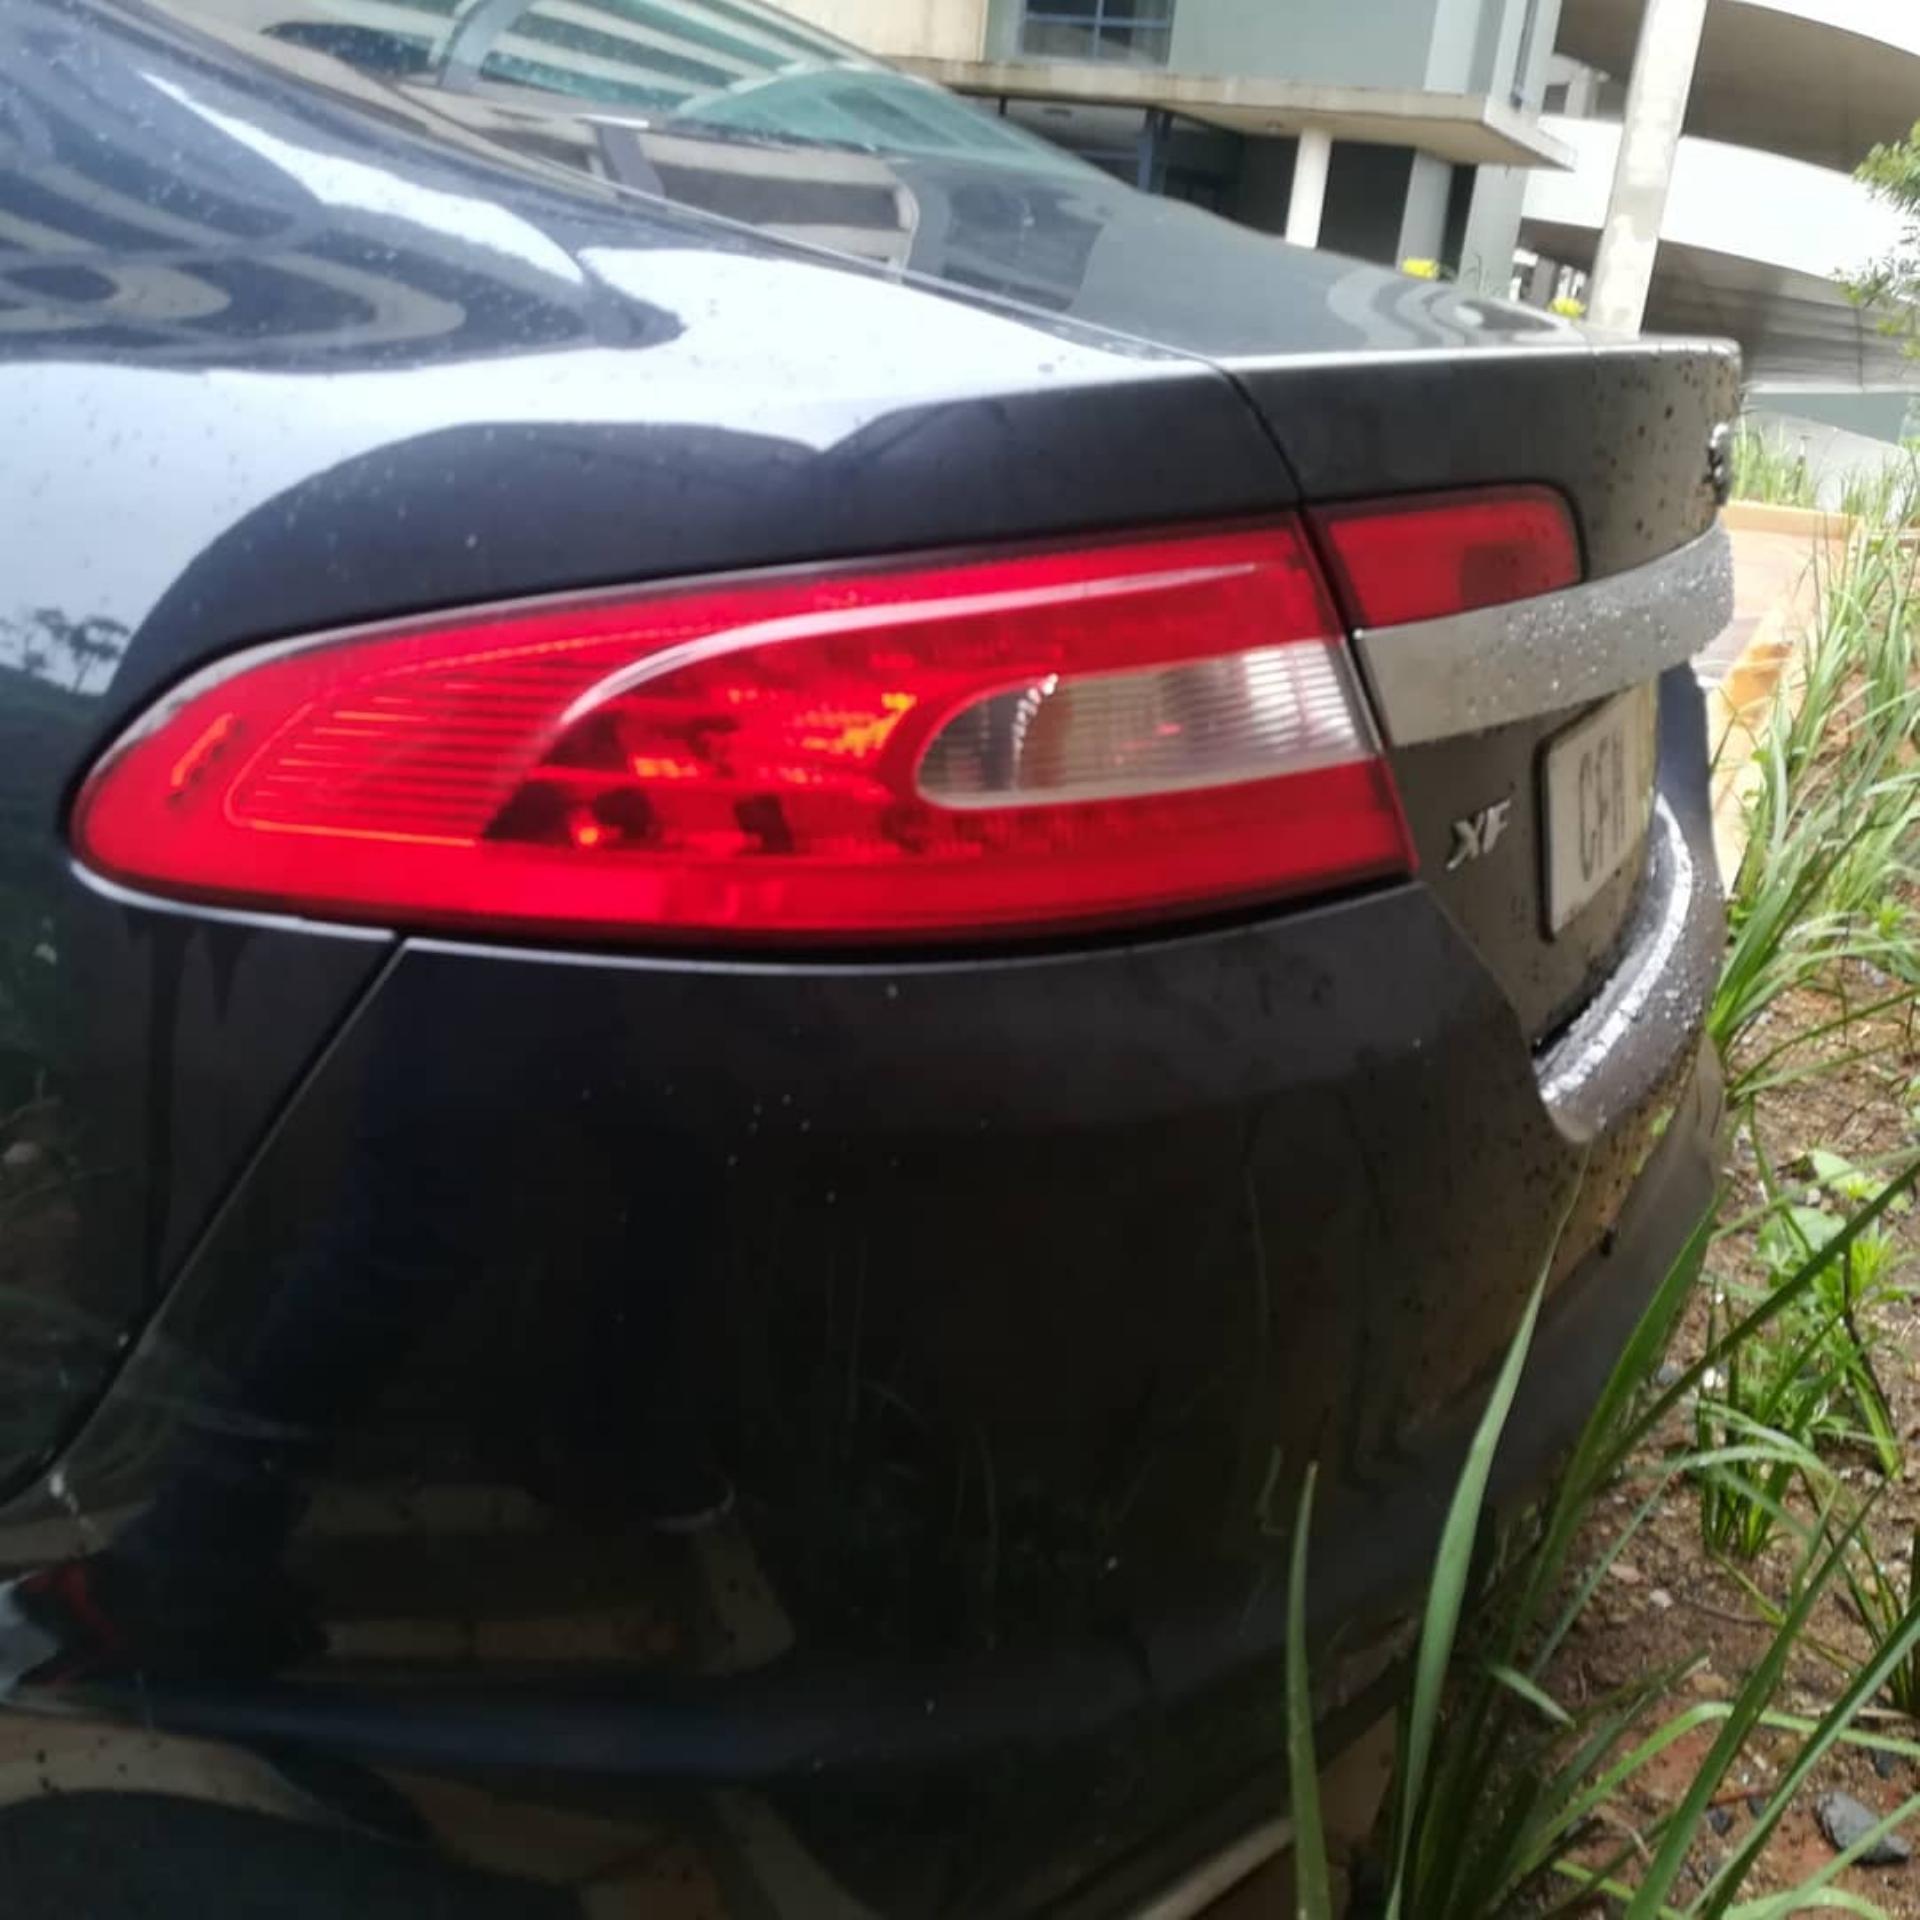 Jaguar XF 3.0 V6